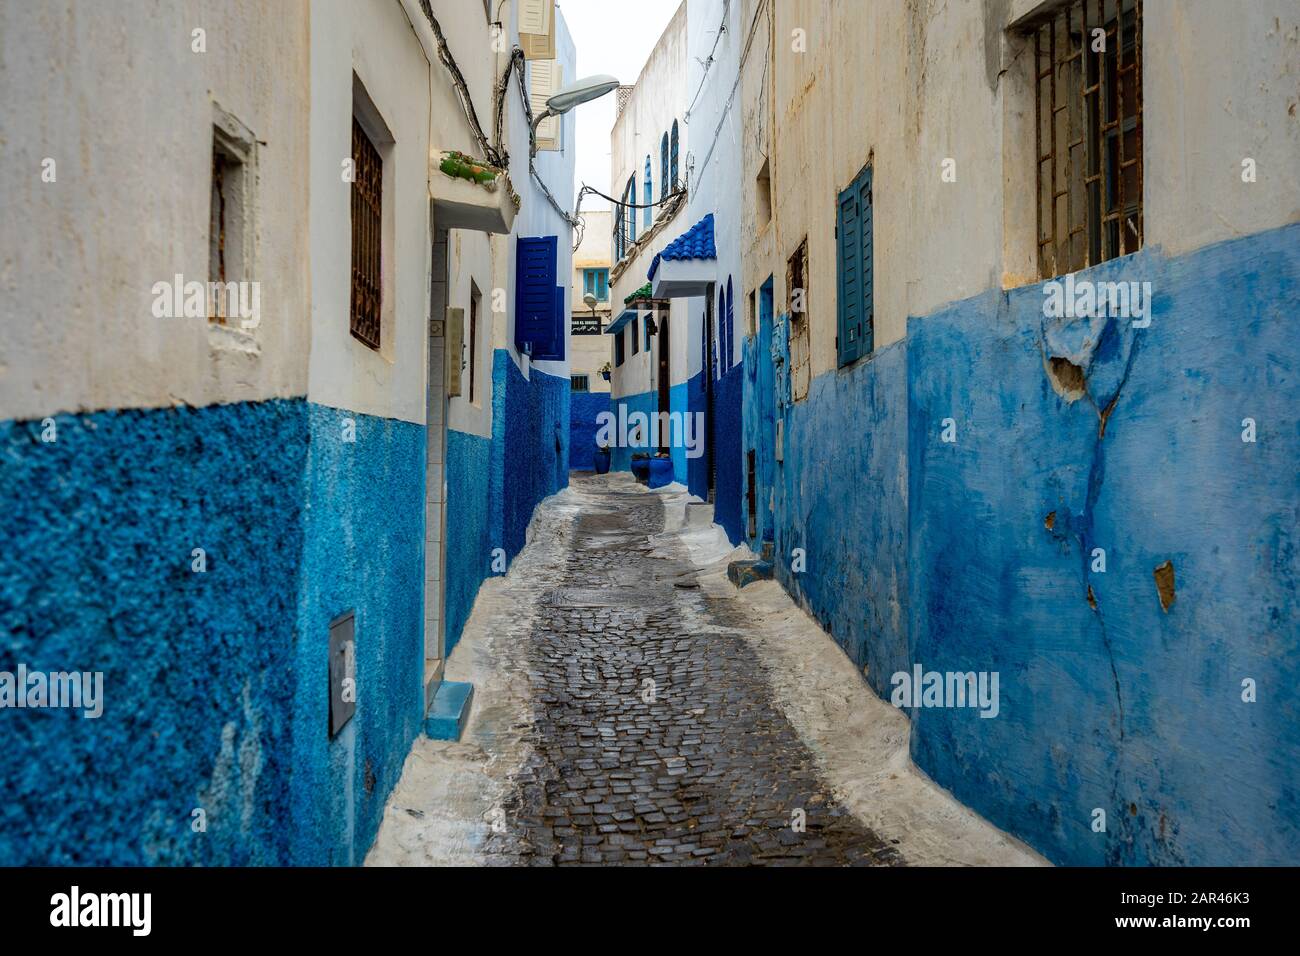 Rabat, Morocco - Narrow alley ways between old houses Stock Photo